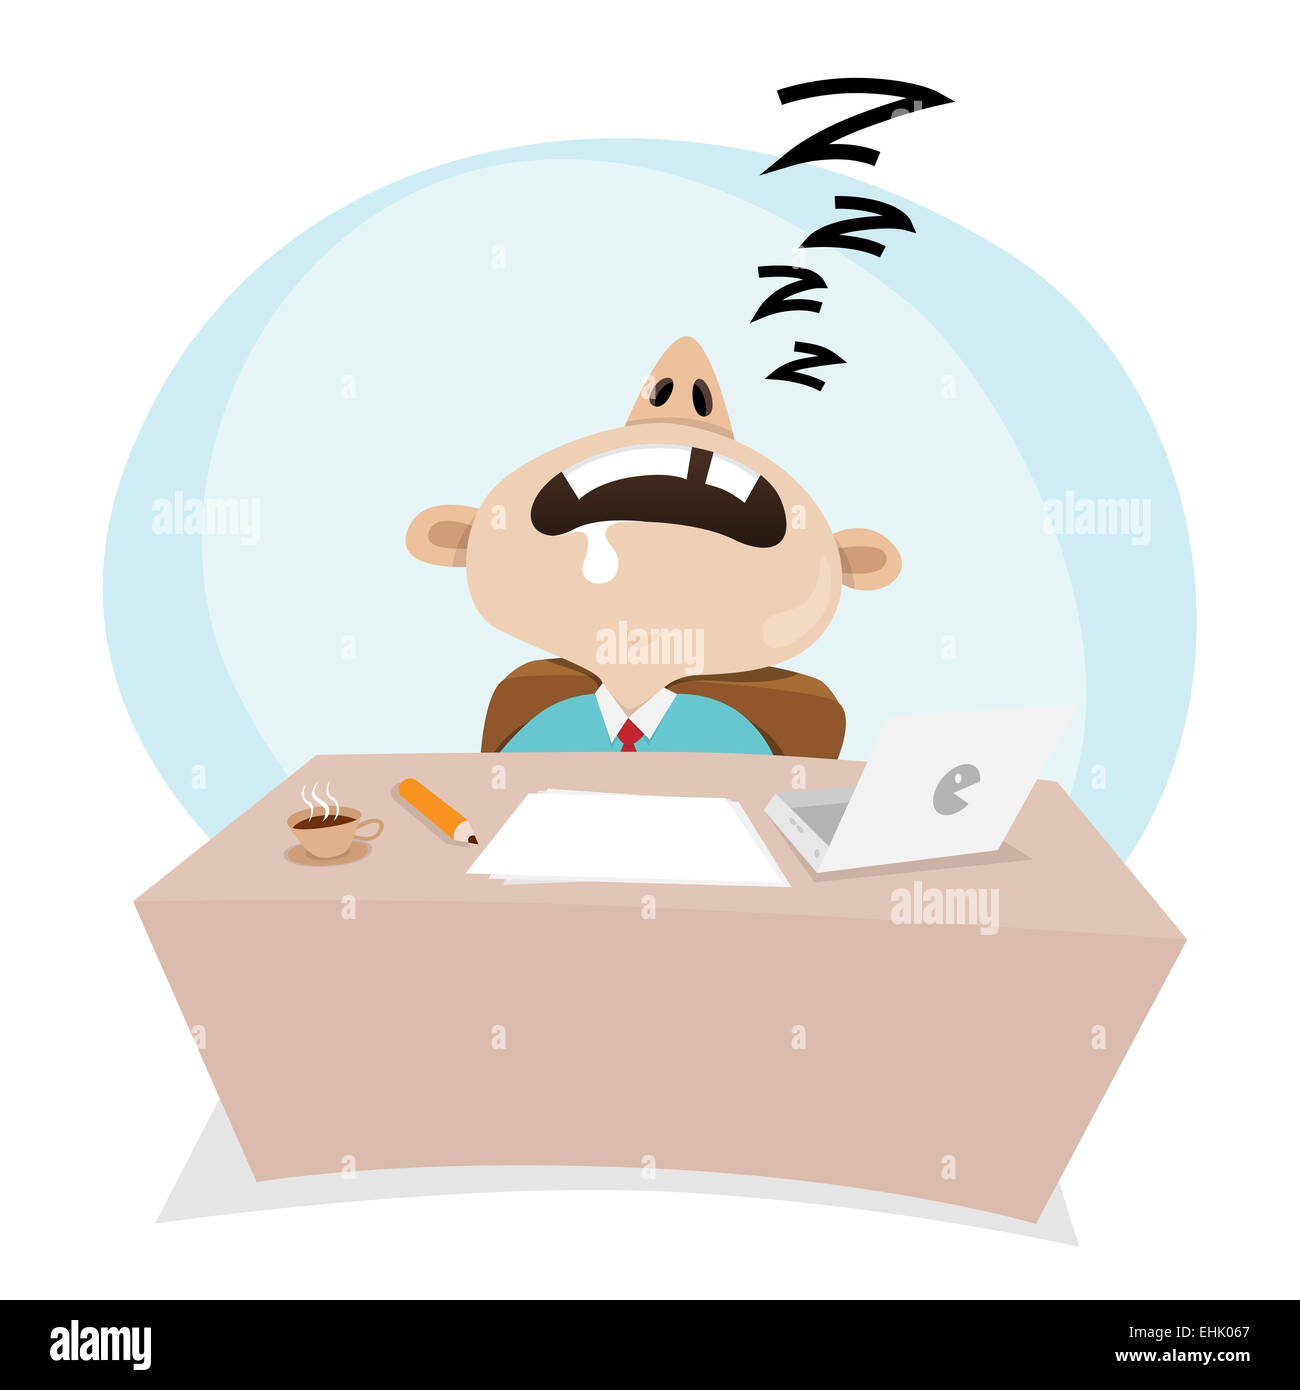 Vector cartoon illustration of a businessman sleeping at work. Stock Photo